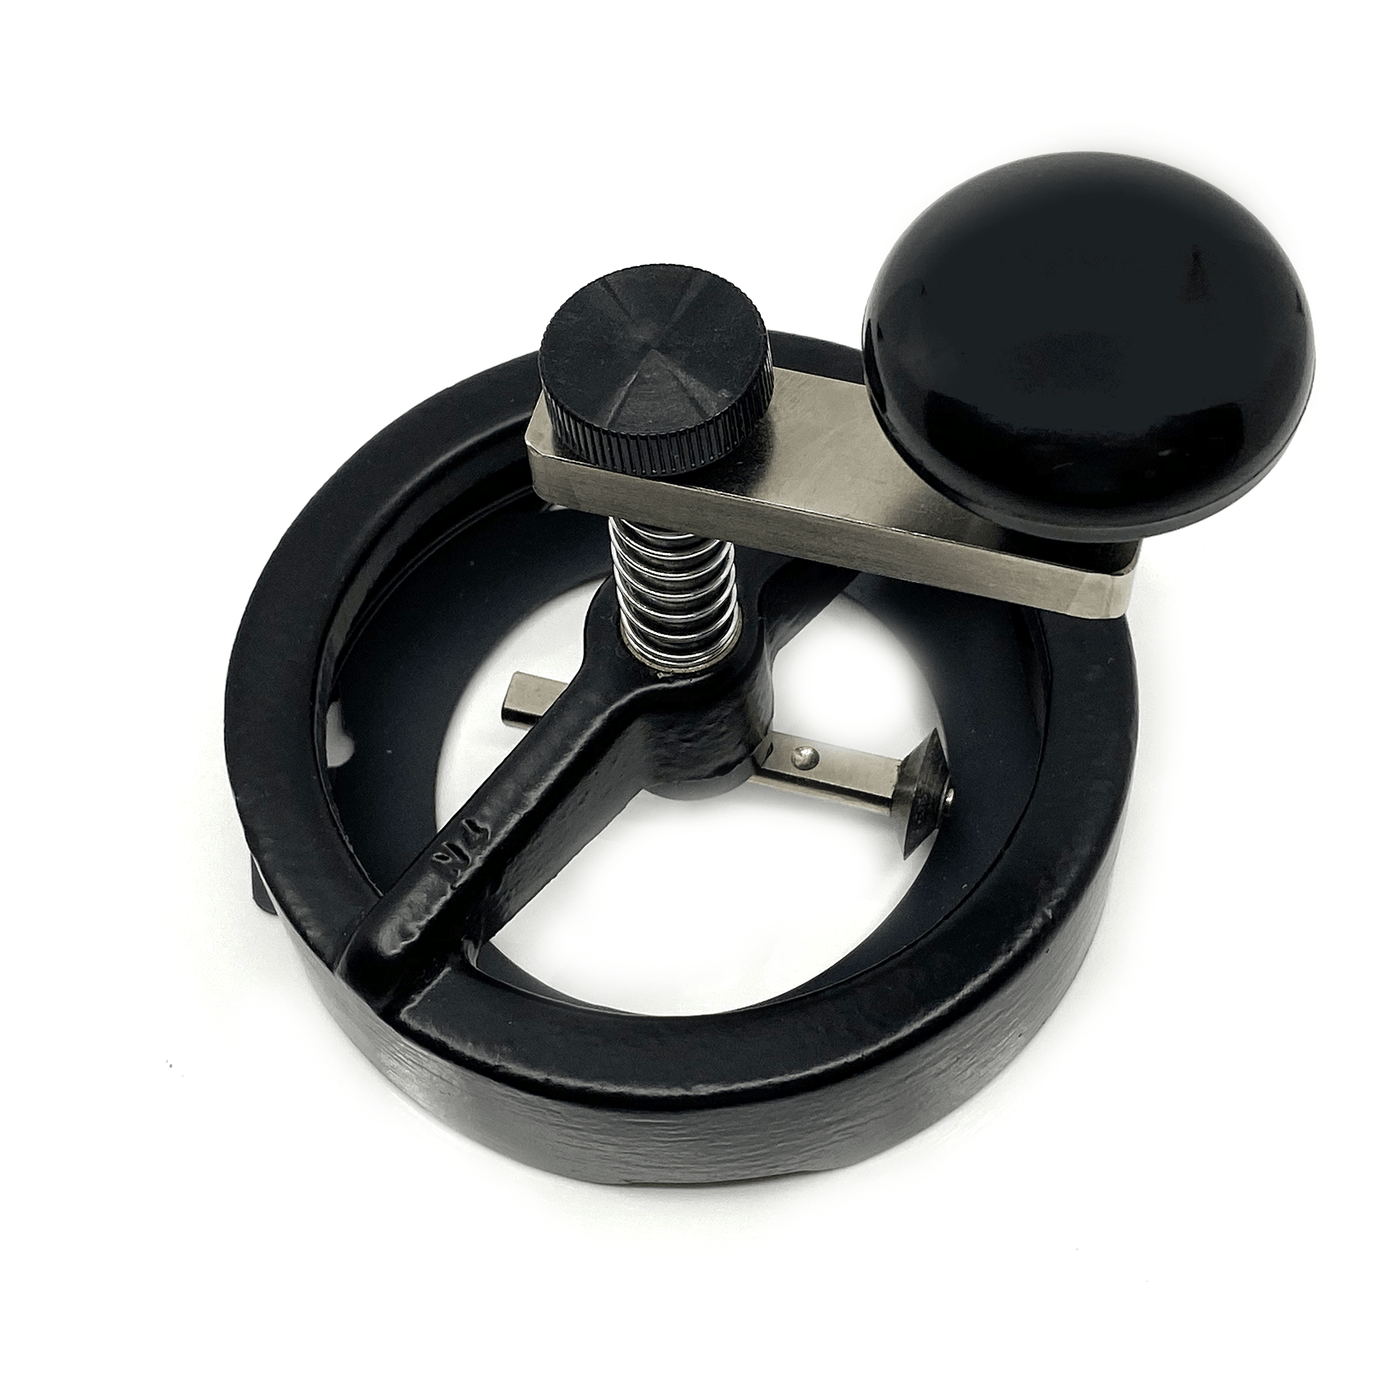 Talent button Adjustable Circle Paper Cutter